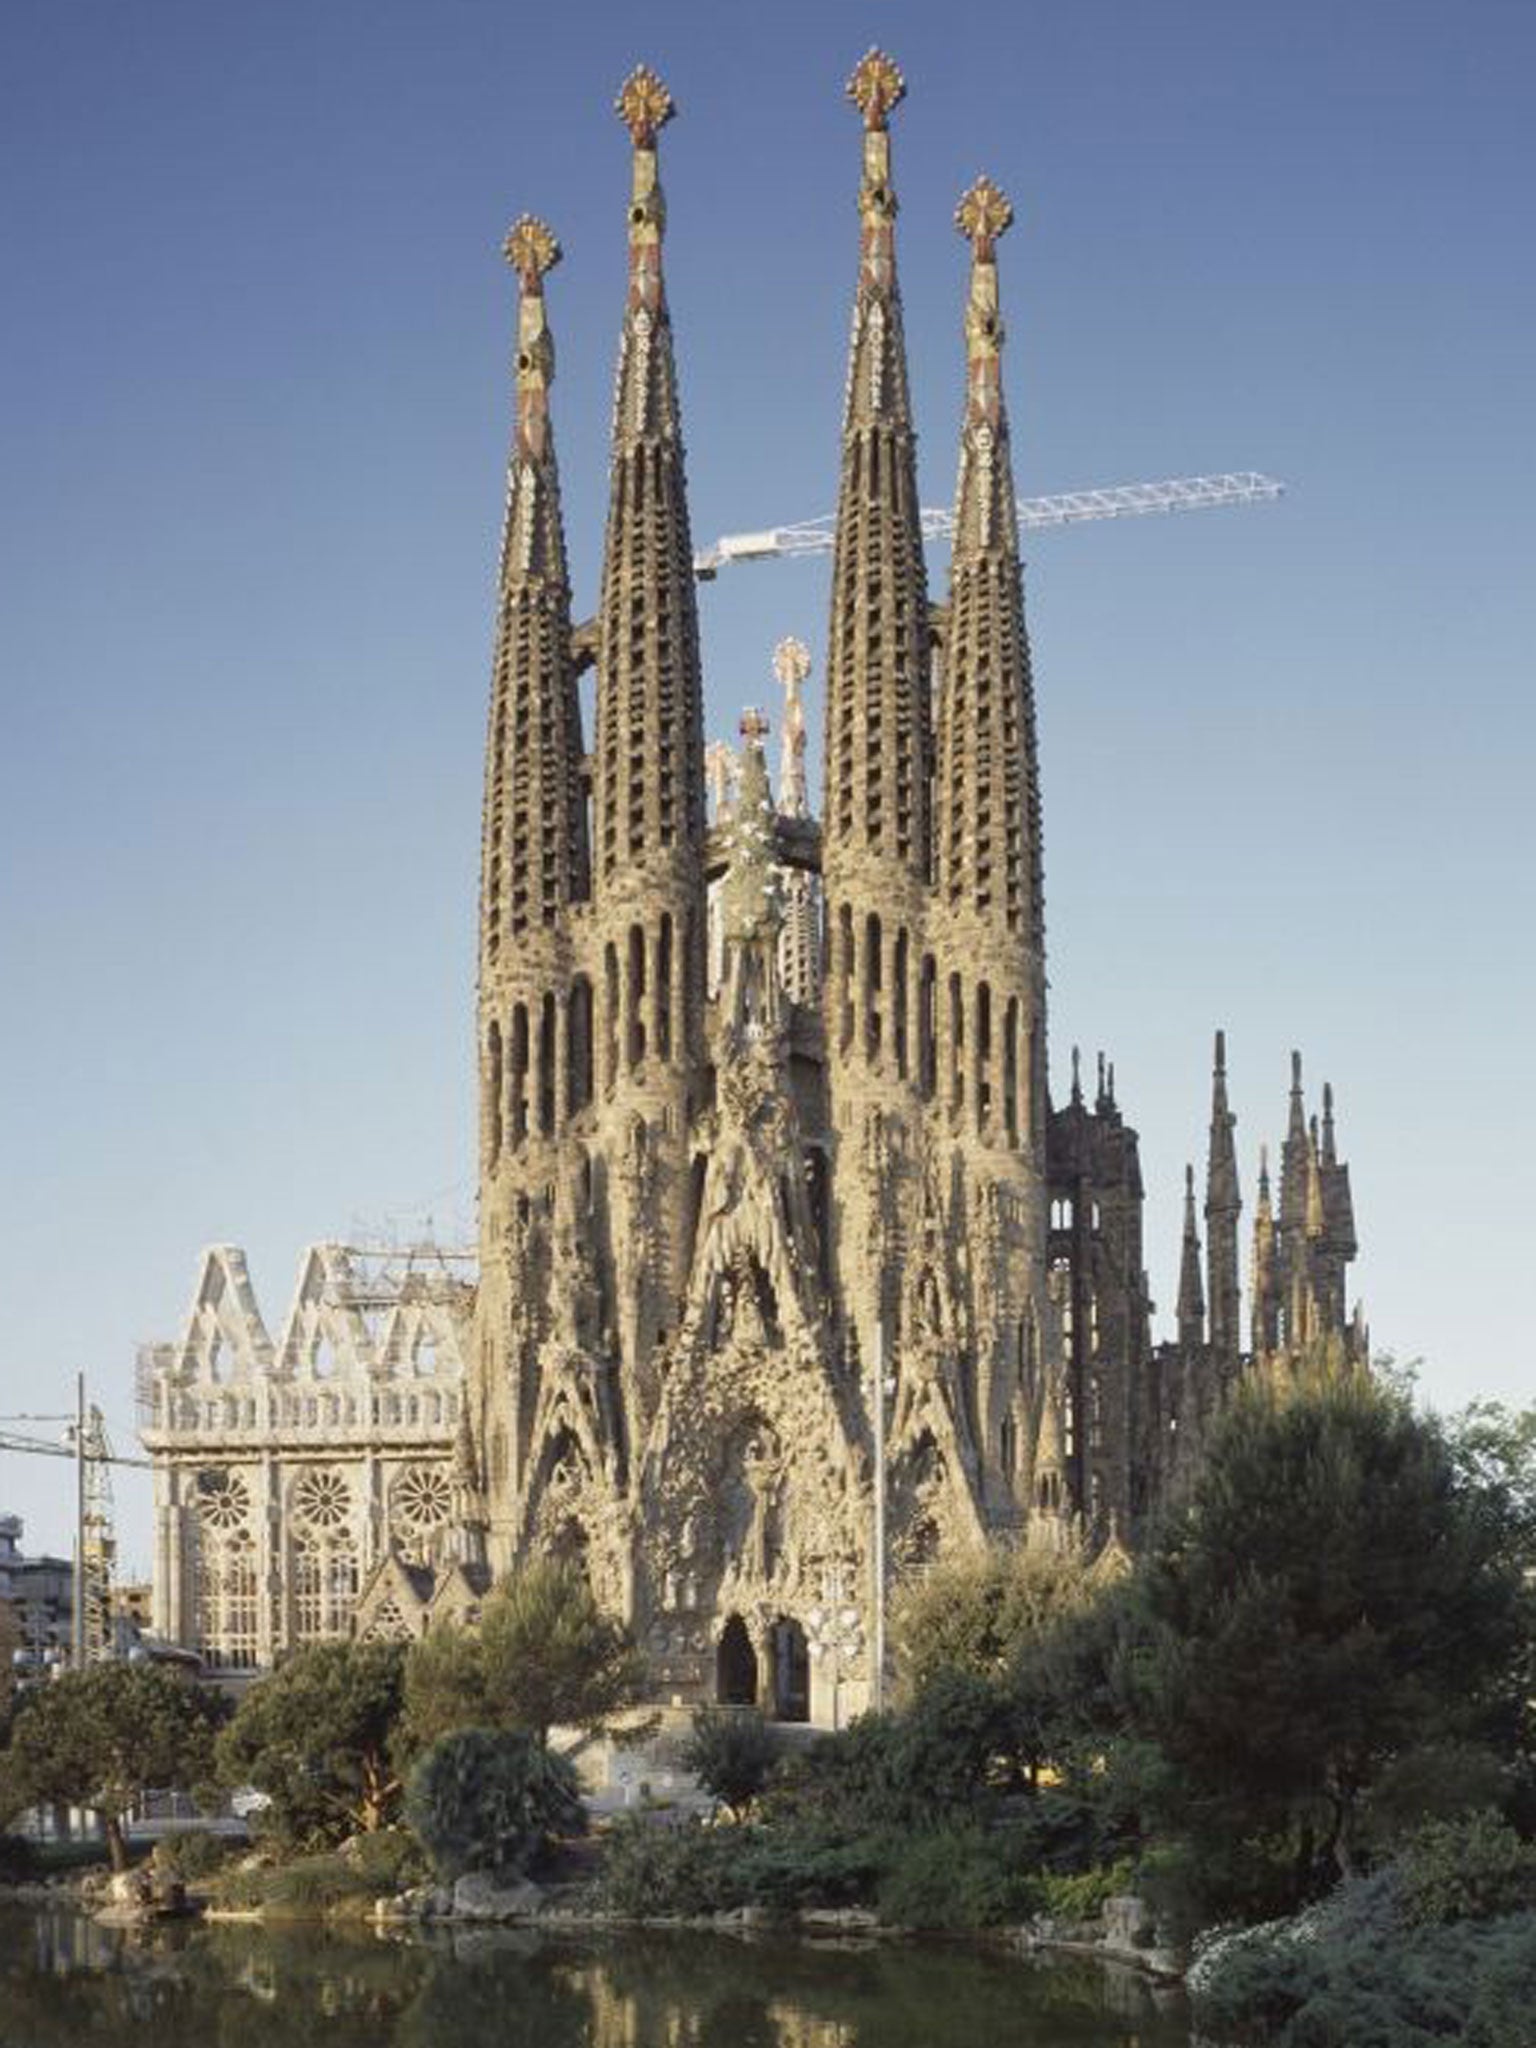 The Sagrada Familia church in Barcelona